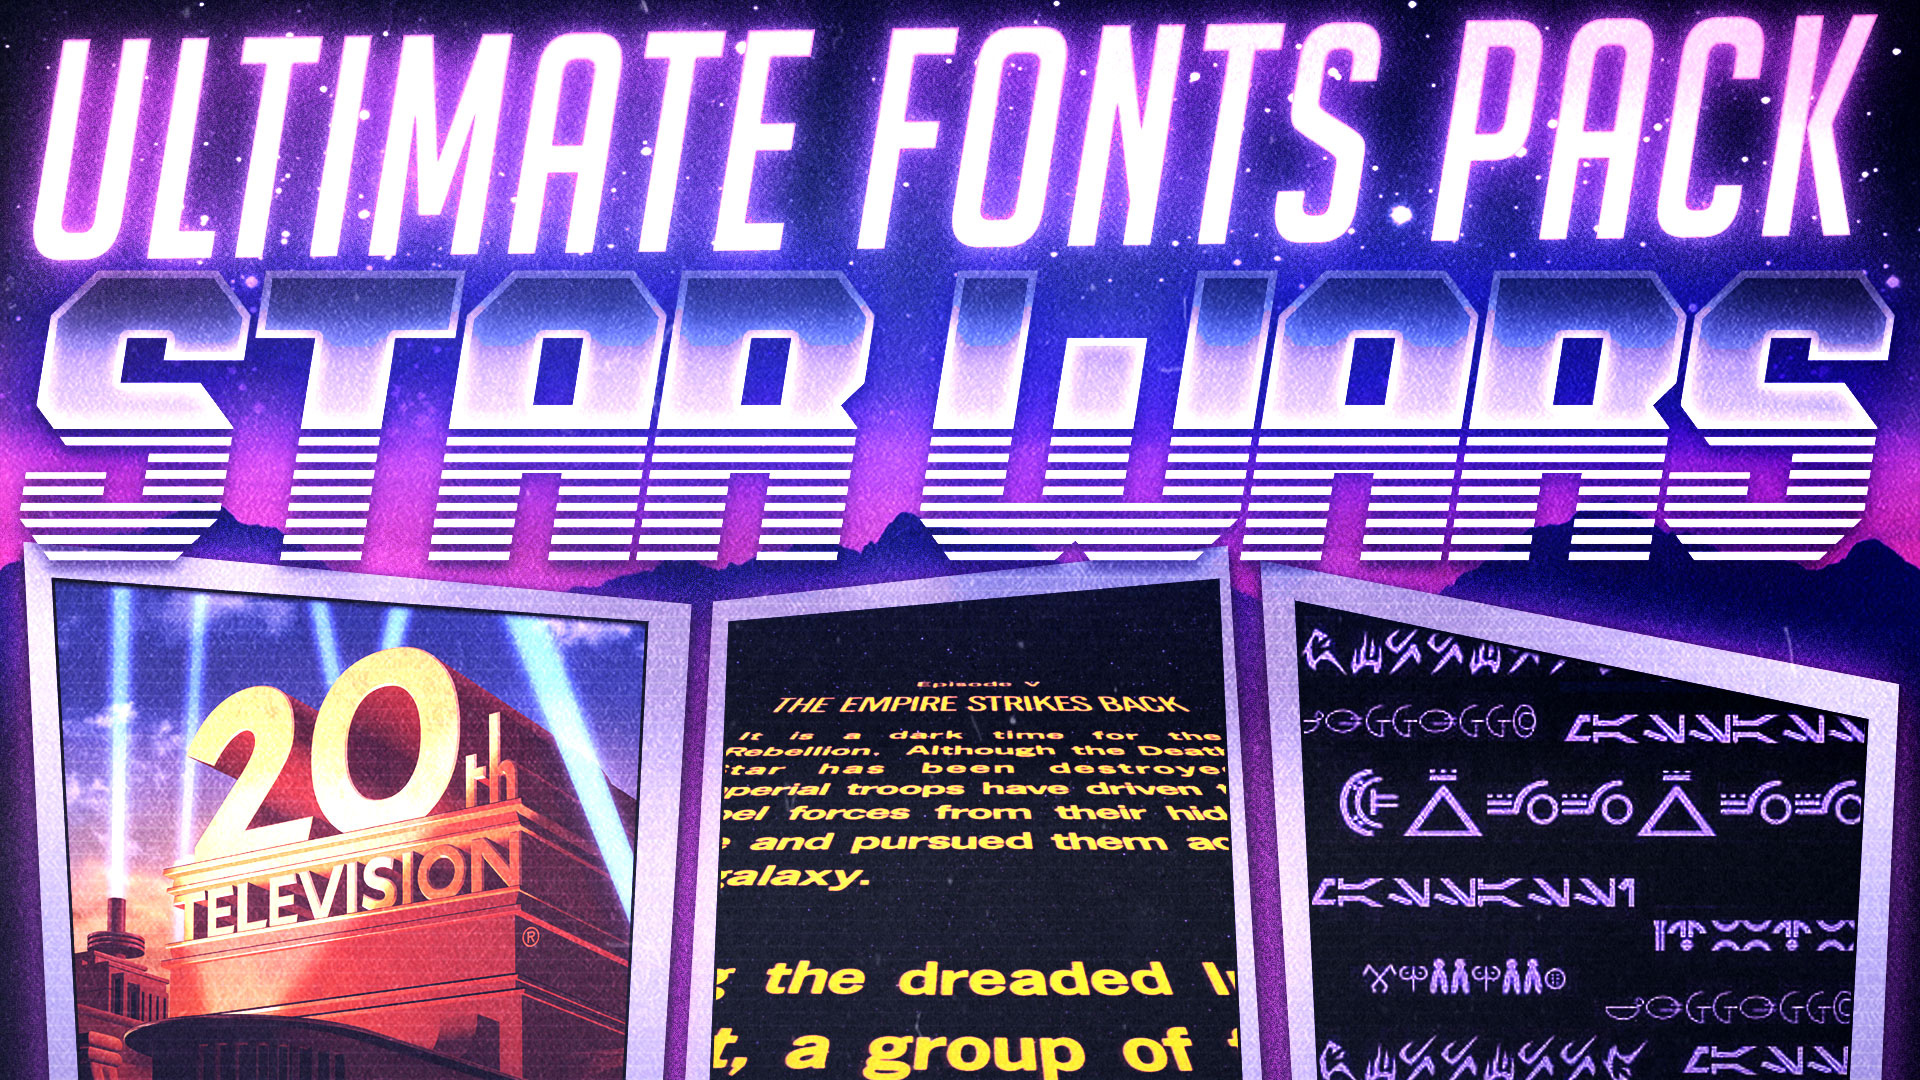 Star Wars | Ultimate Fonts Pack